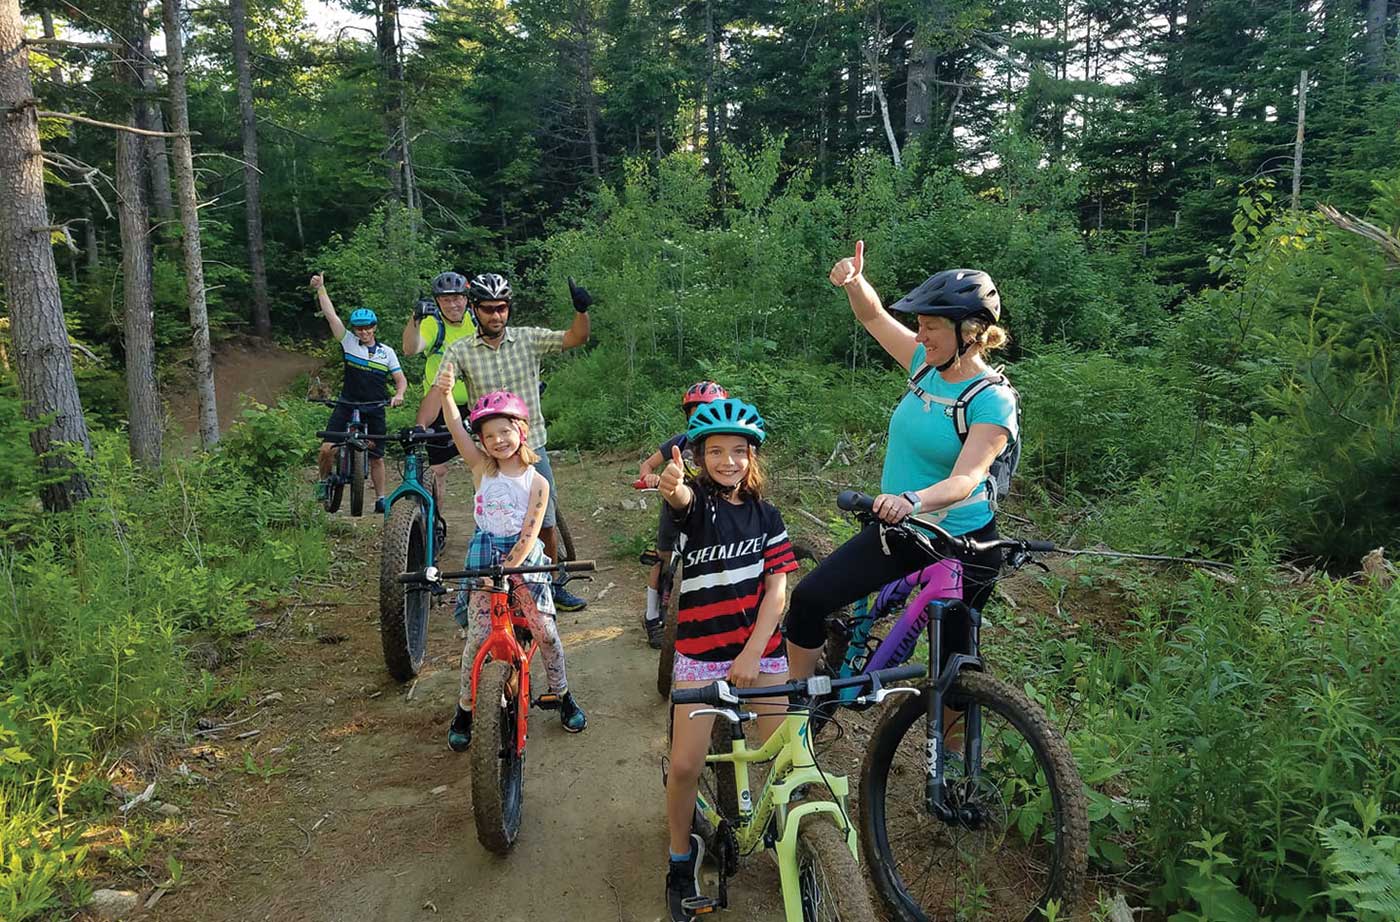 adults and children biking on trail